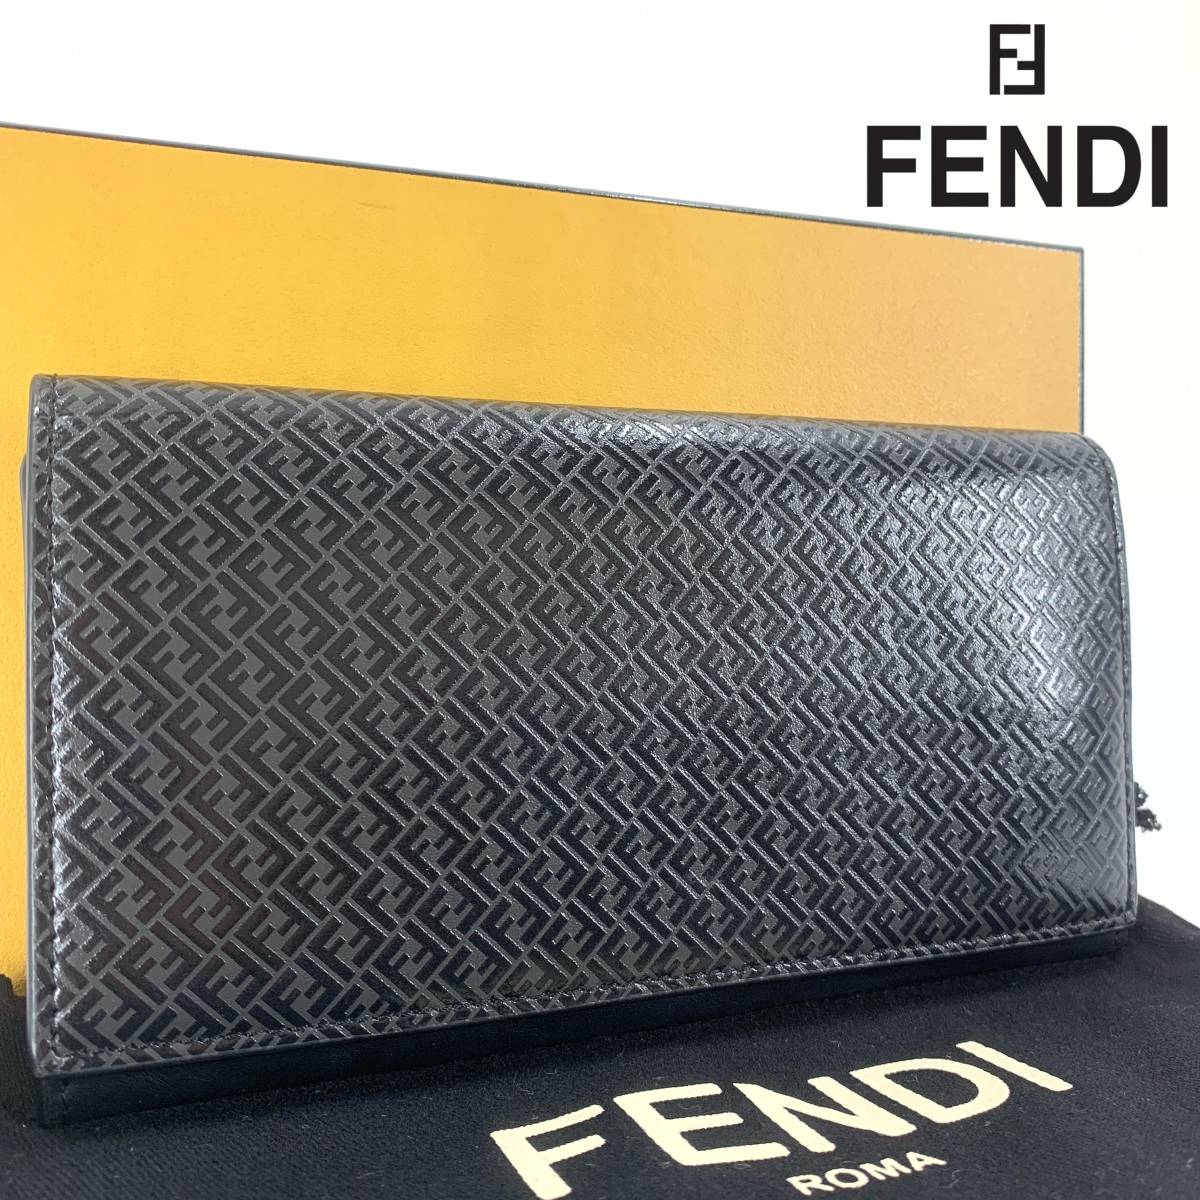 NF FENDI/マフラー フェンディ グレー/灰色 ブランド 長さ×幅